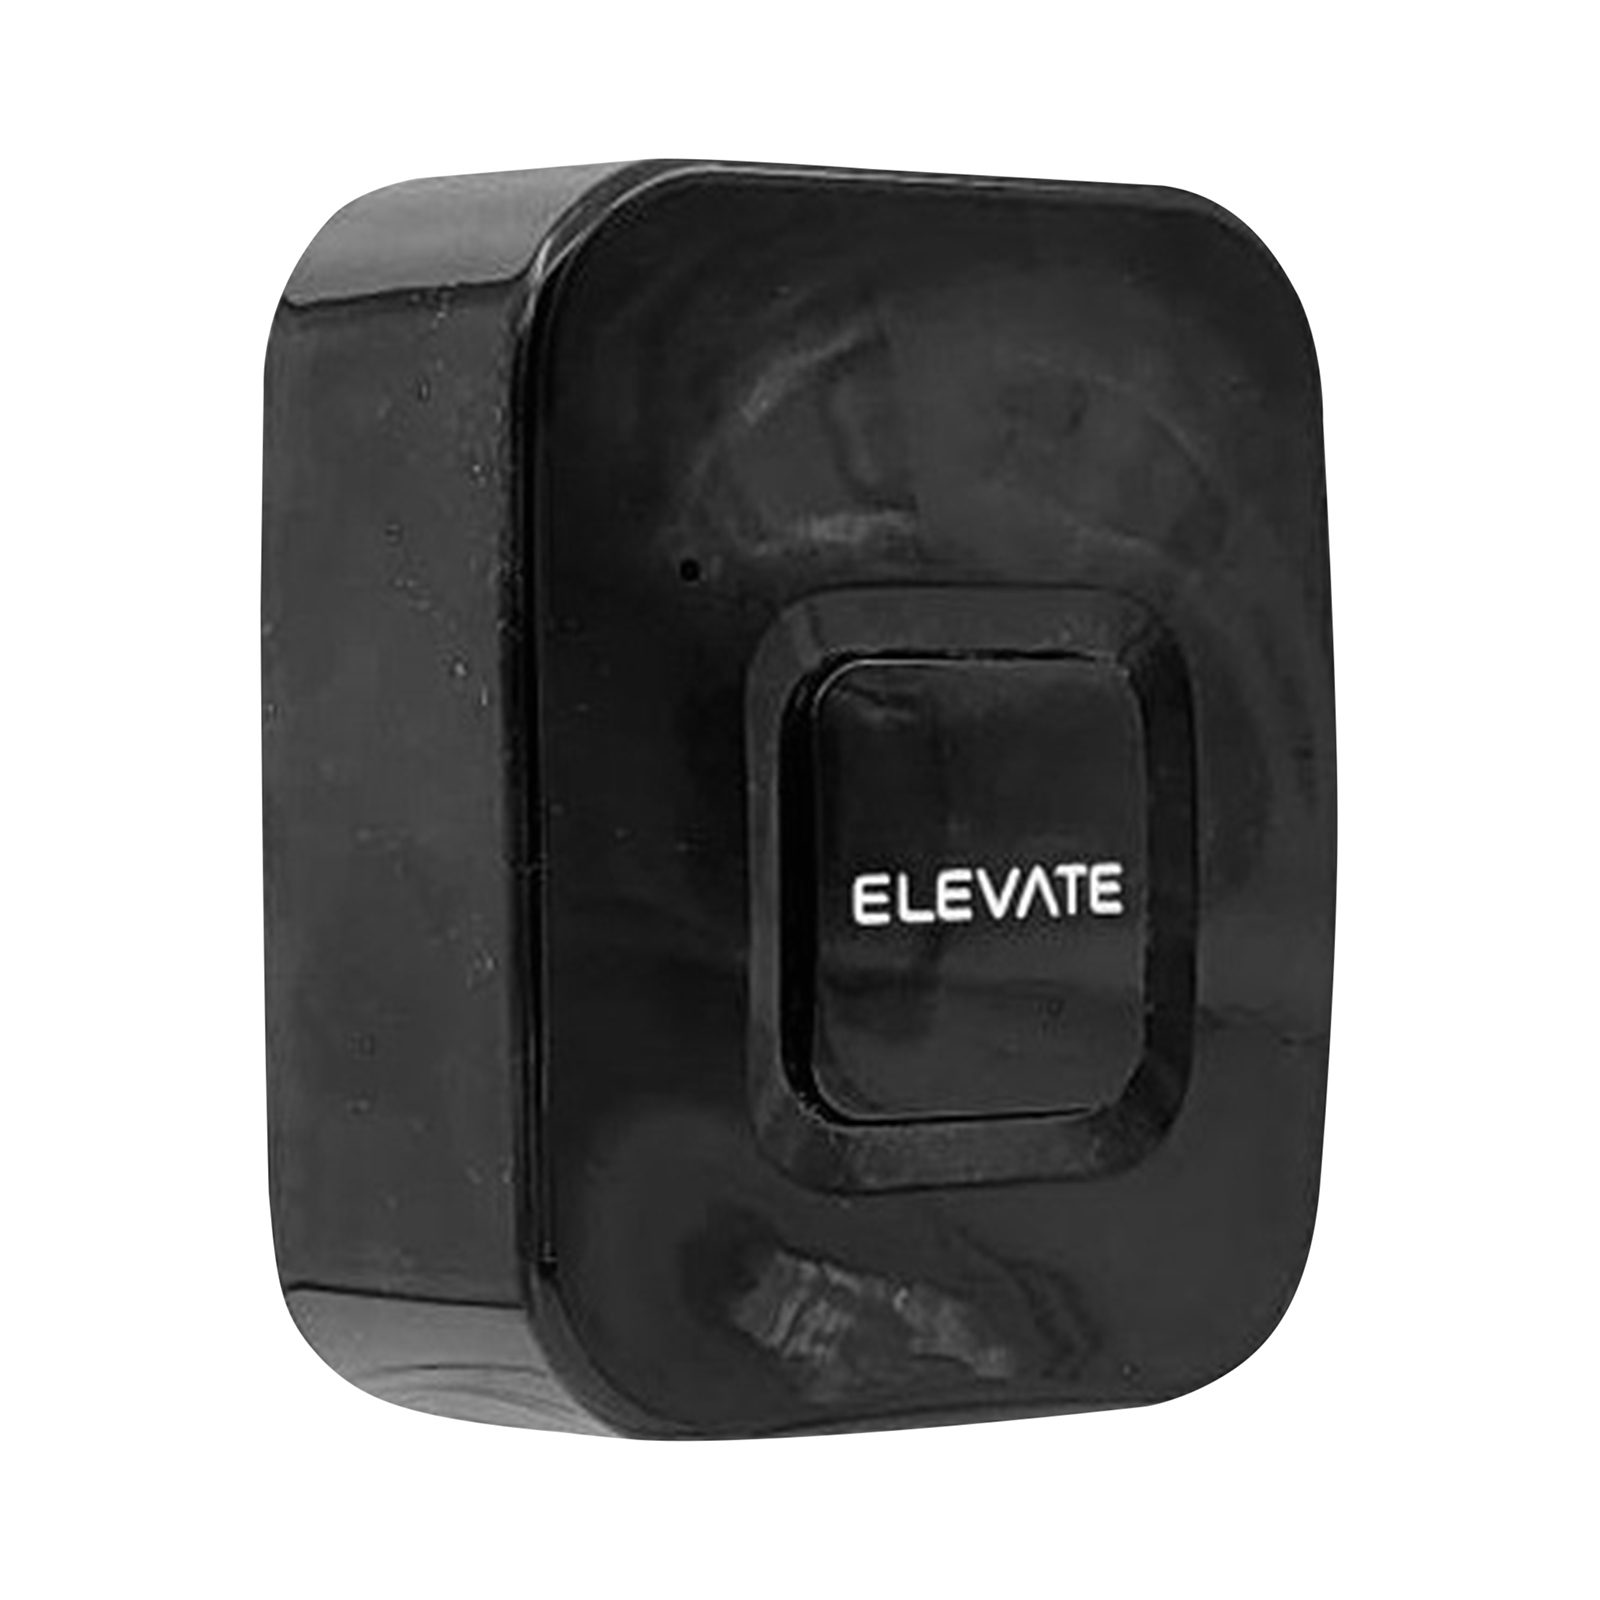 Elevate Compact Air Freshener Fragrance Dispenser, Black